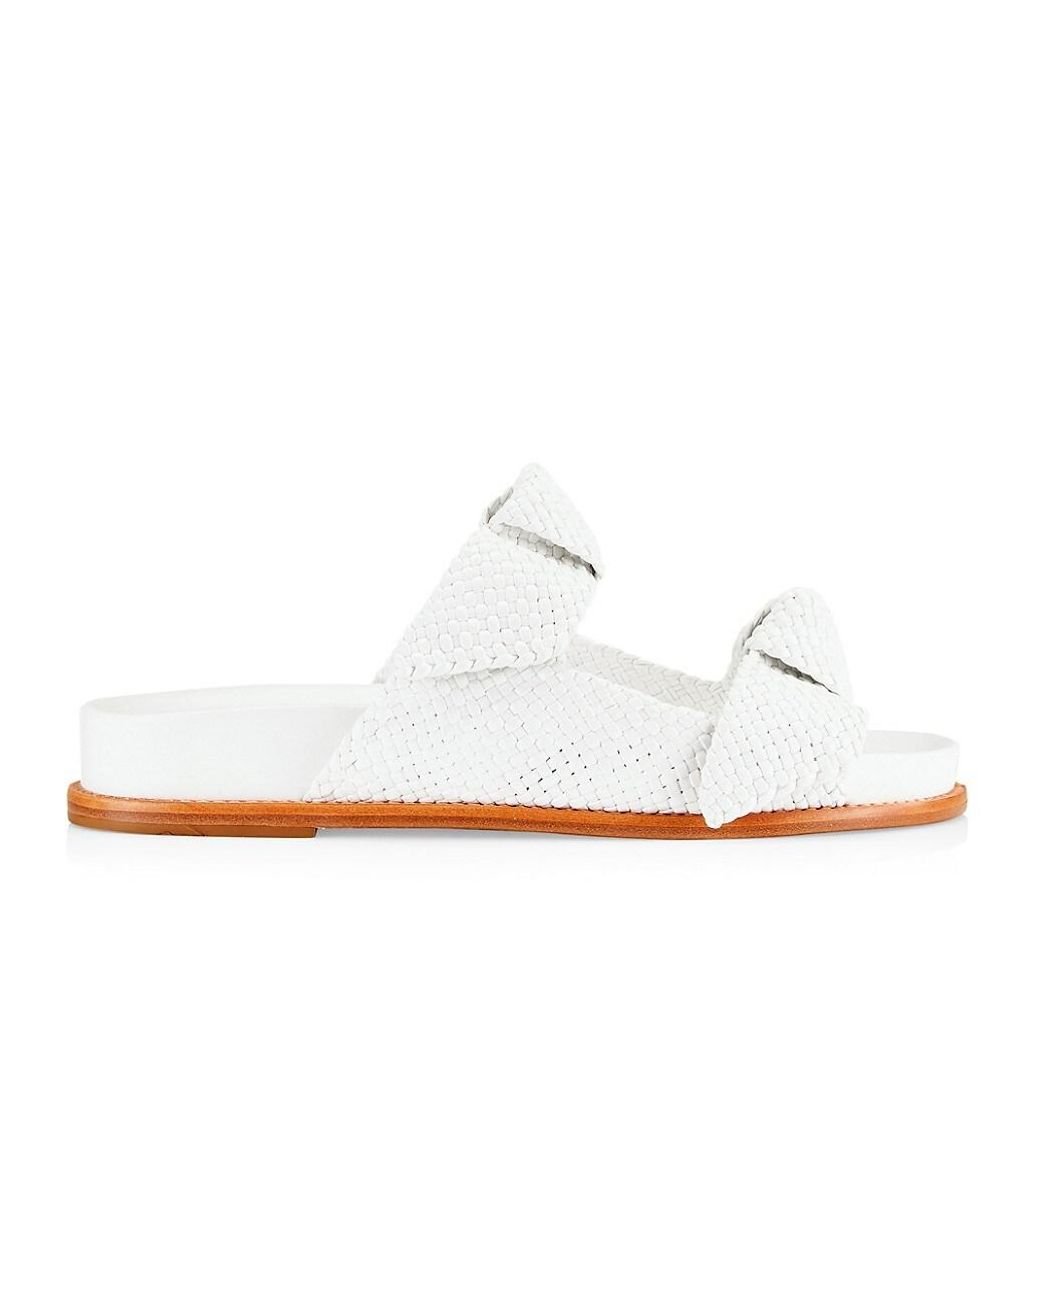 Alexandre Birman Asymmetric Clarita Braided Leather Sandals in White | Lyst